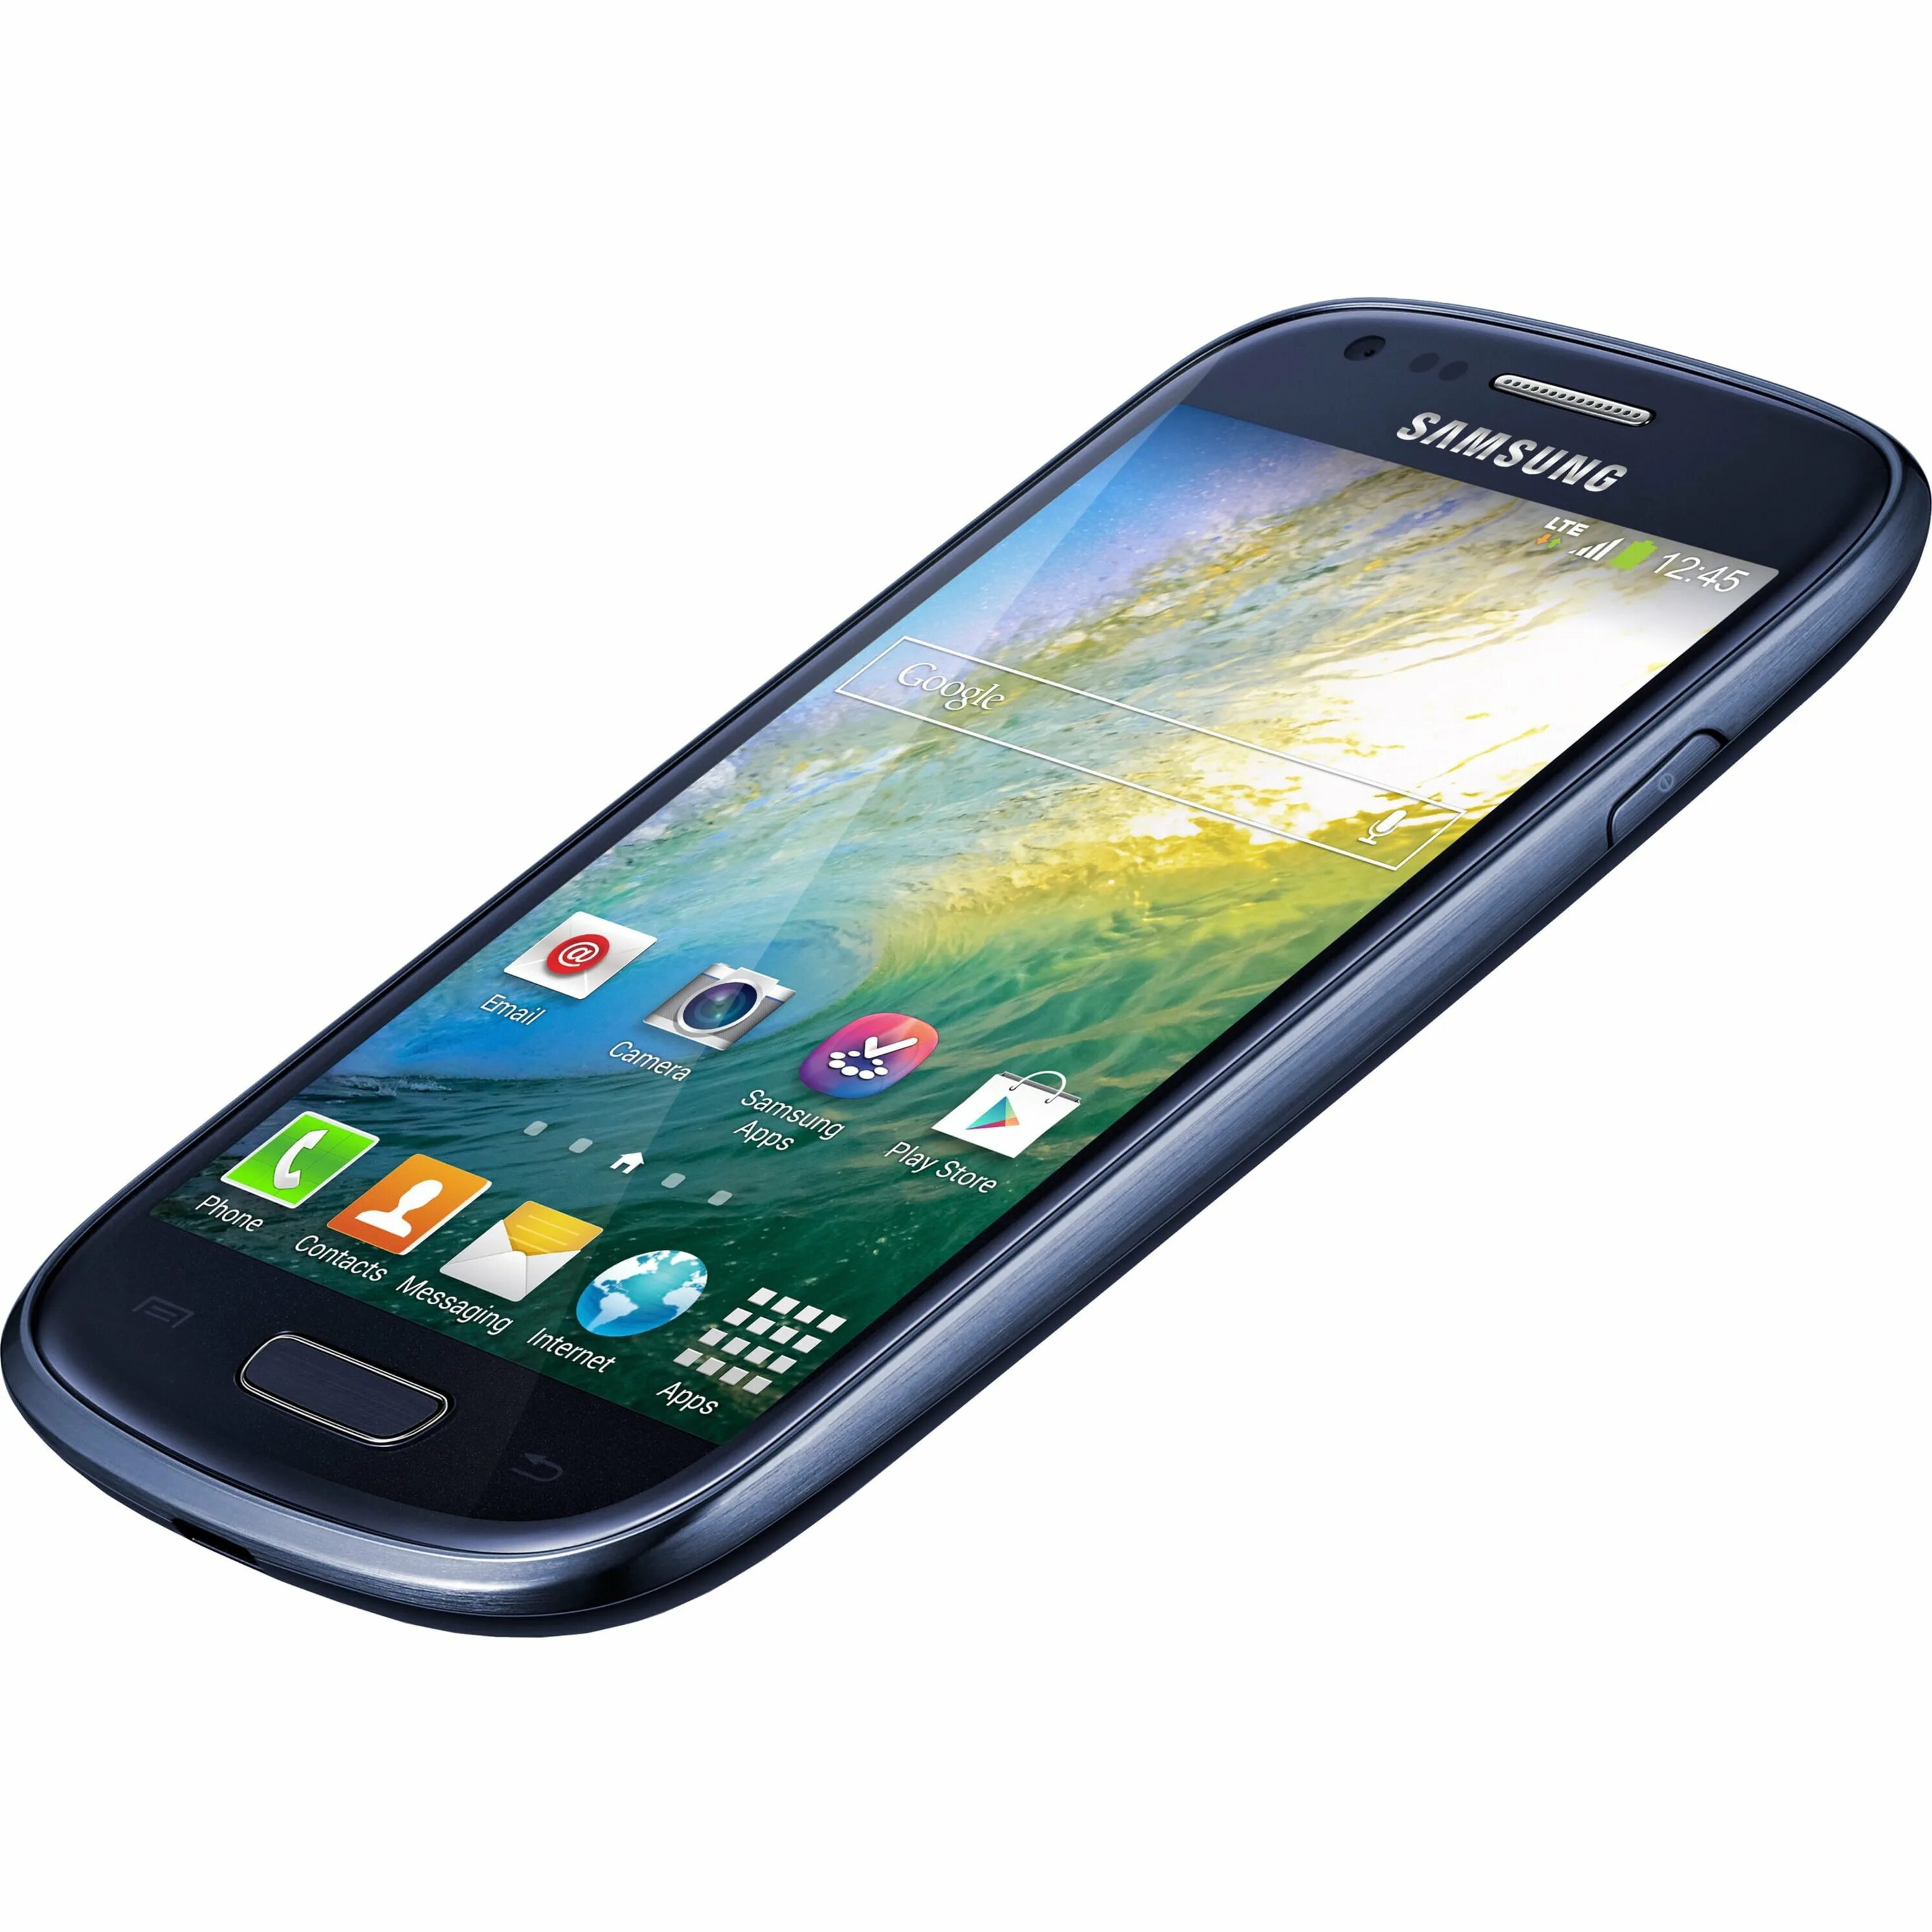 Samsung g730. Samsung s3 Mini. Samsung Galaxy s3 Mini. Samsung Galaxy s lll Mini.